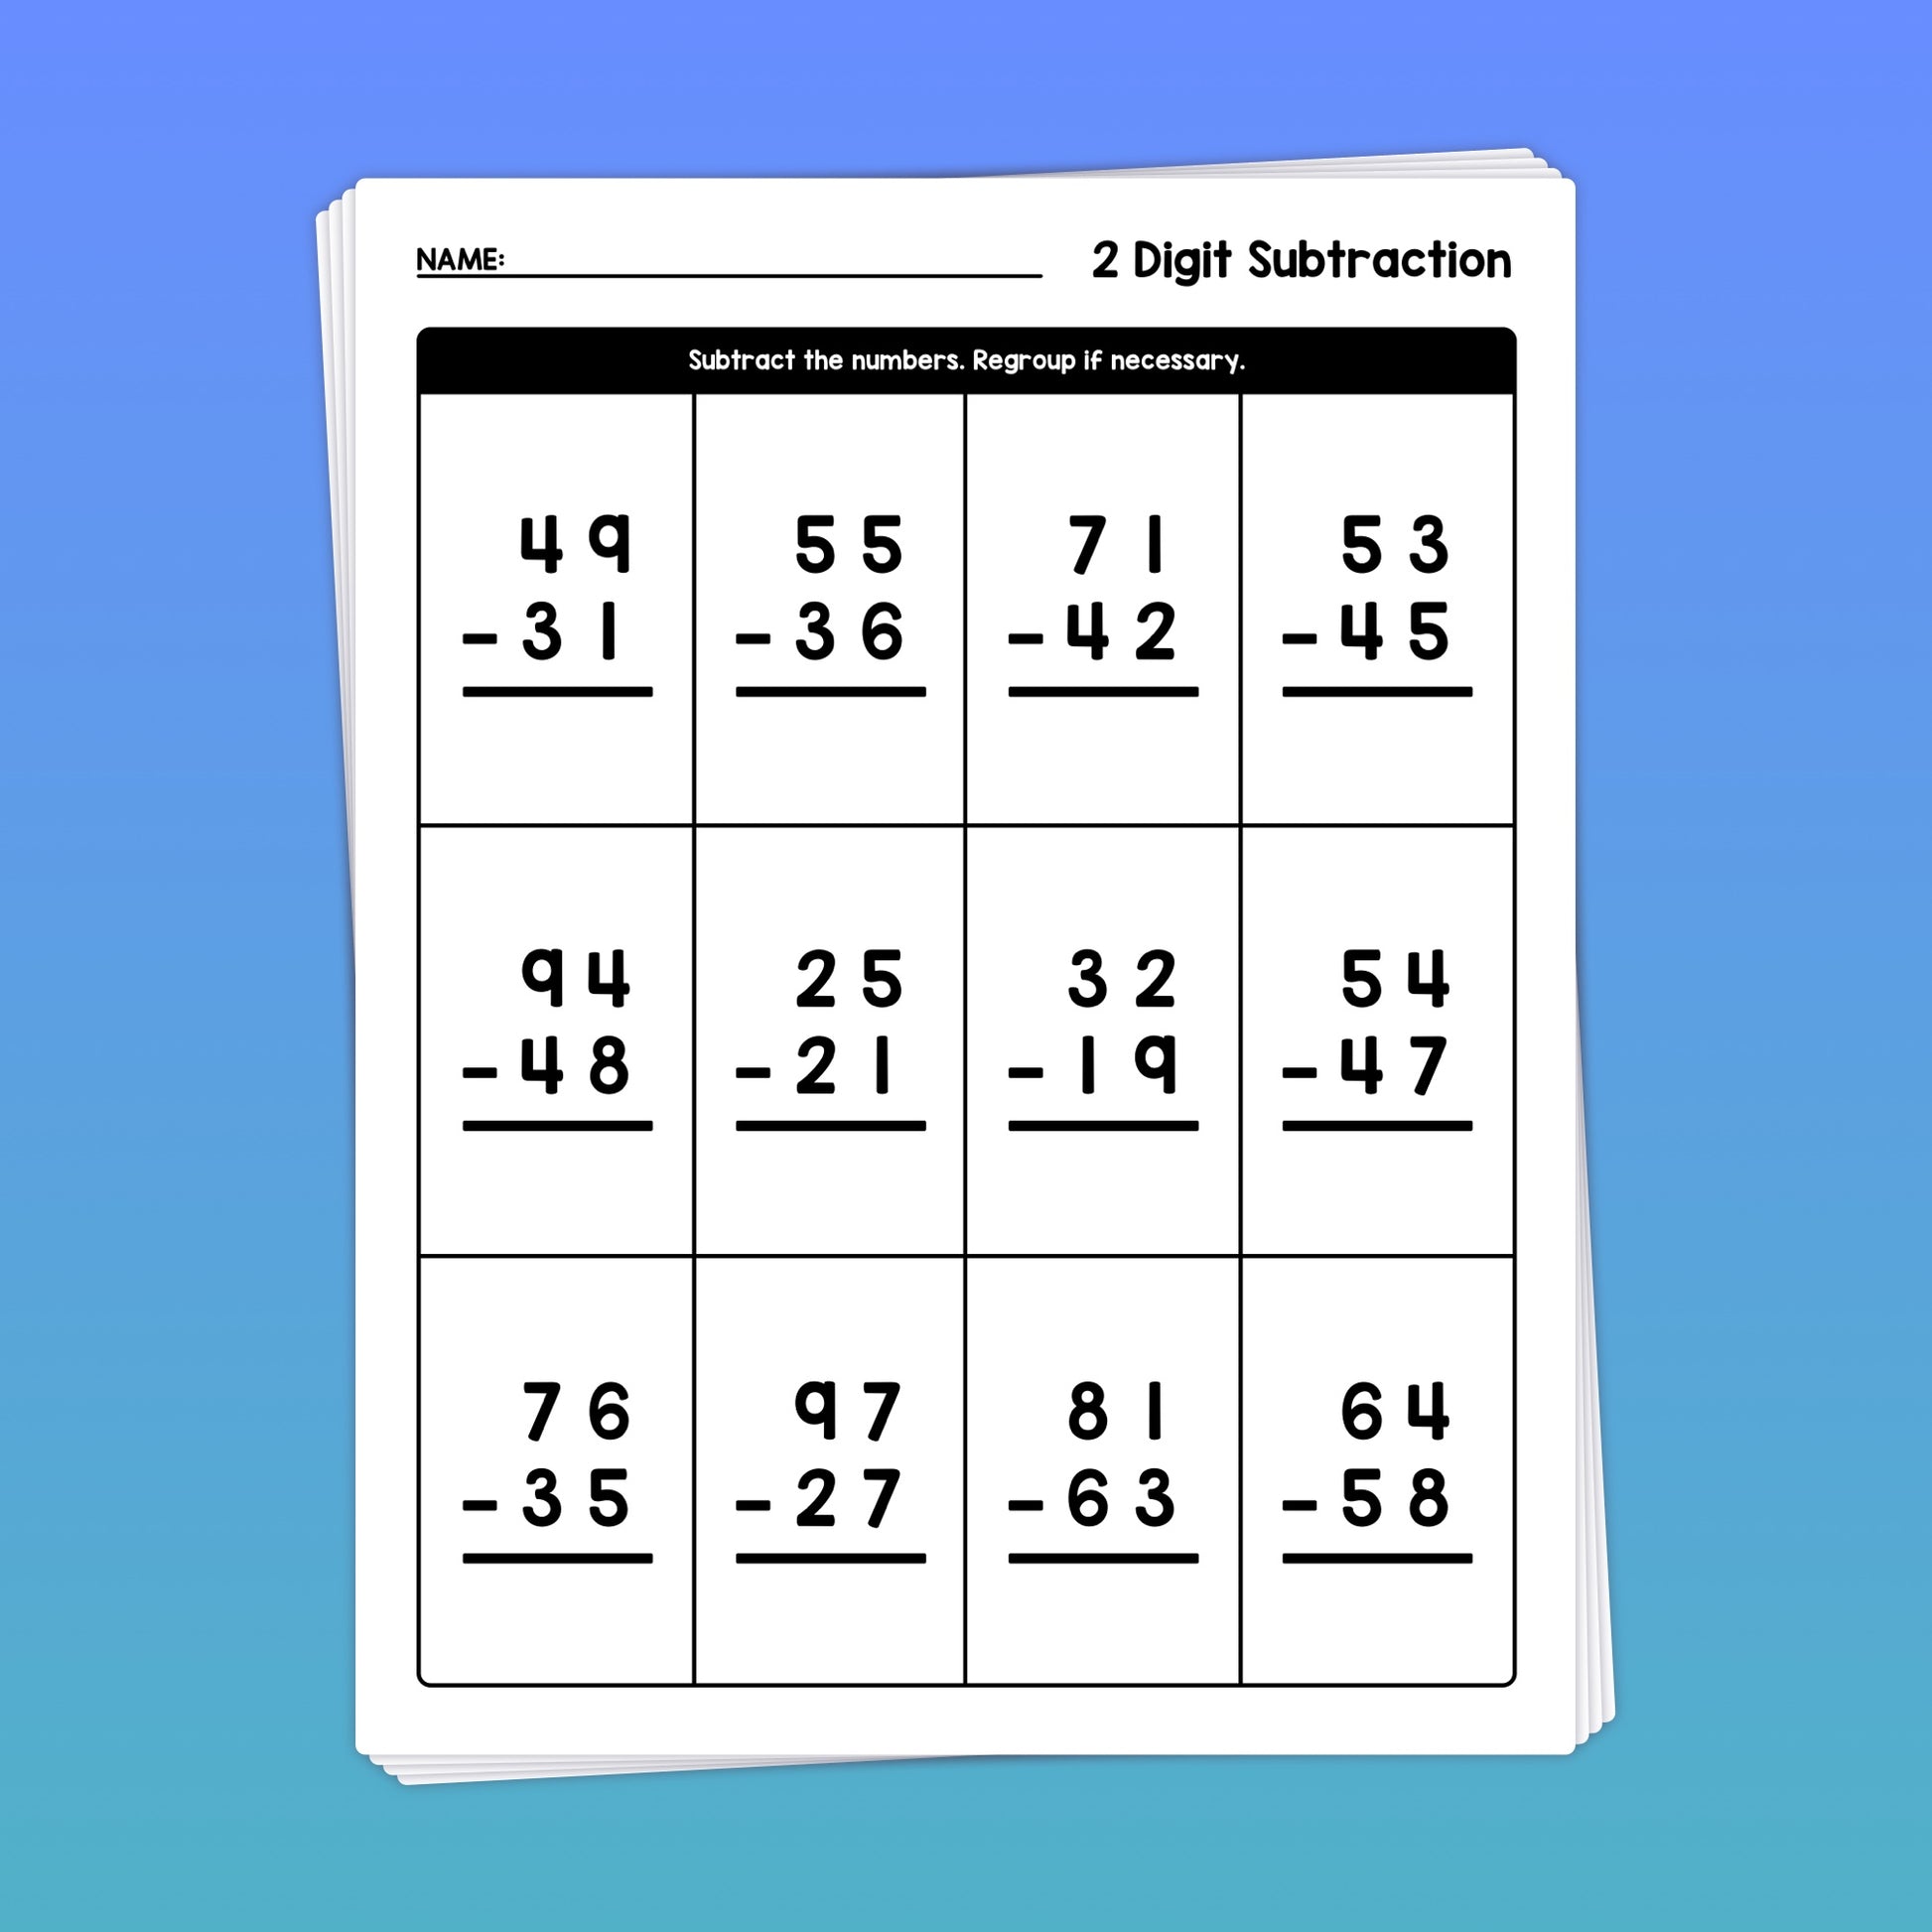 2 digit subtraction worksheets for 1st grade, 2nd grade, and 3rd grade